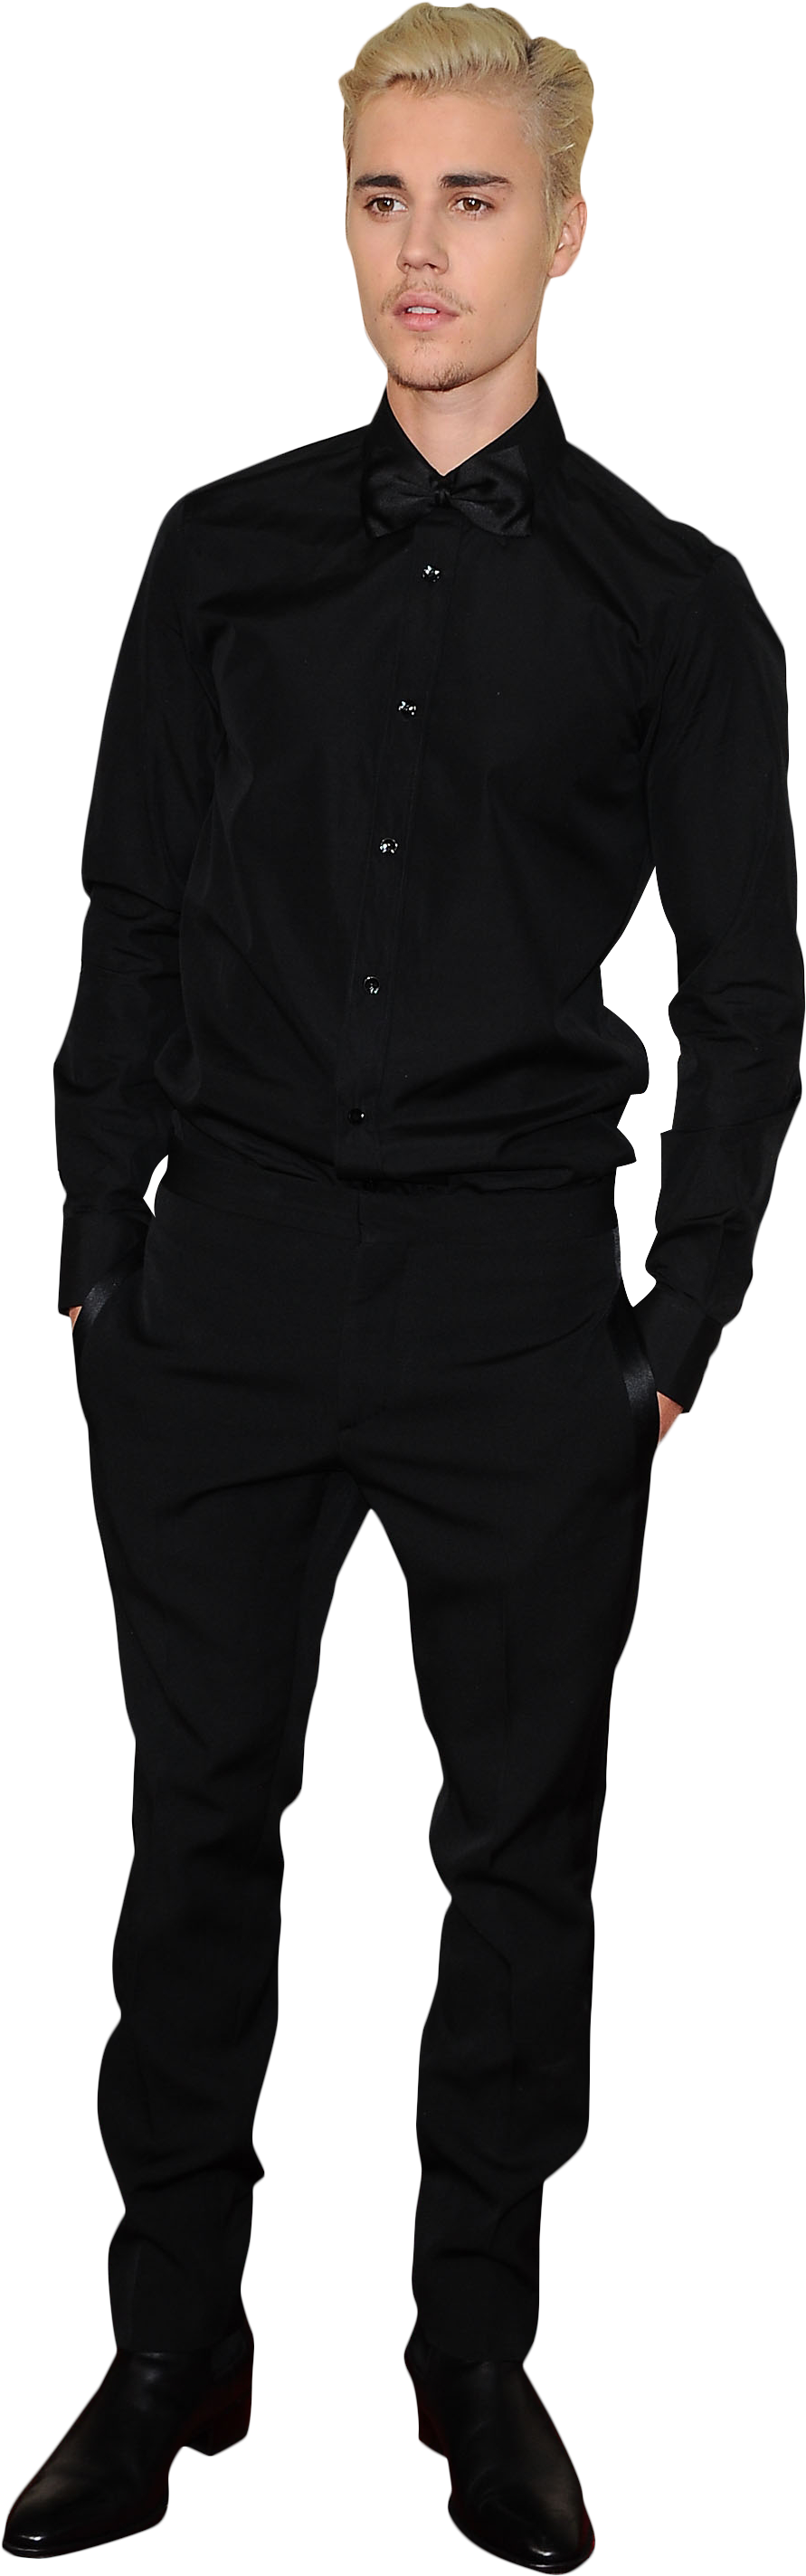 A Man In A Black Suit